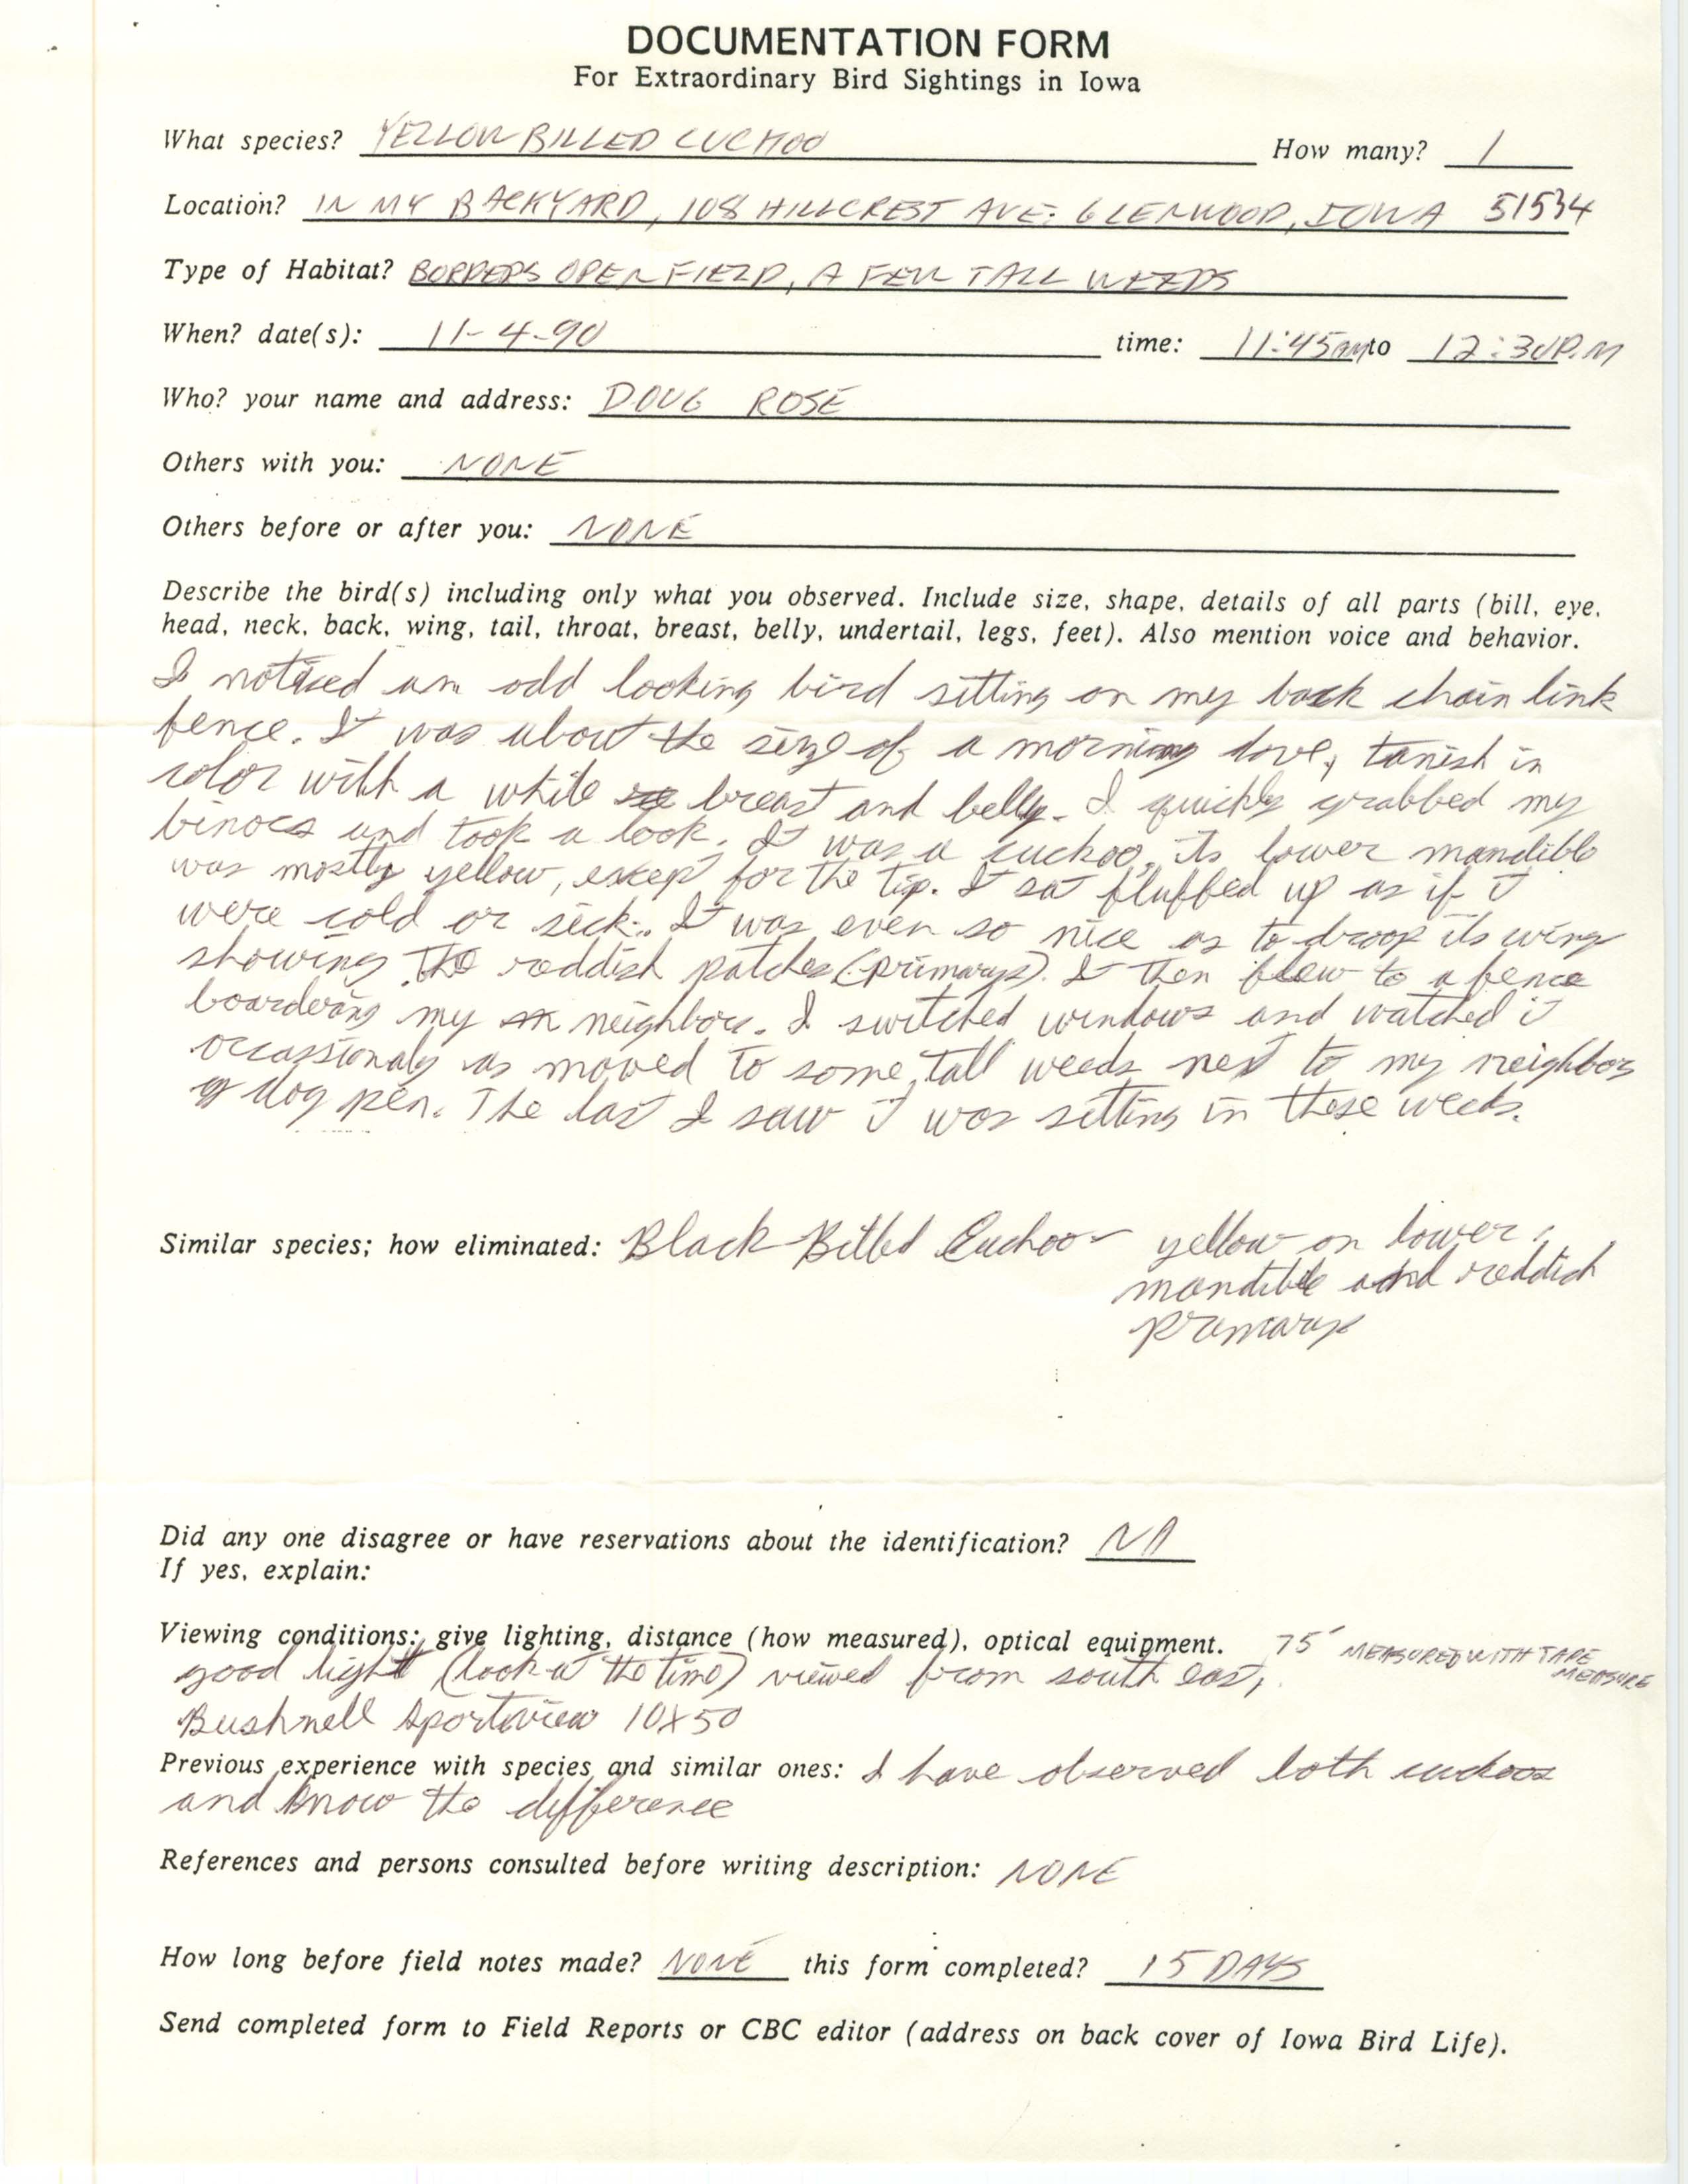 Rare bird documentation form for Yellow-billed Cuckoo at Glenwood, 1990